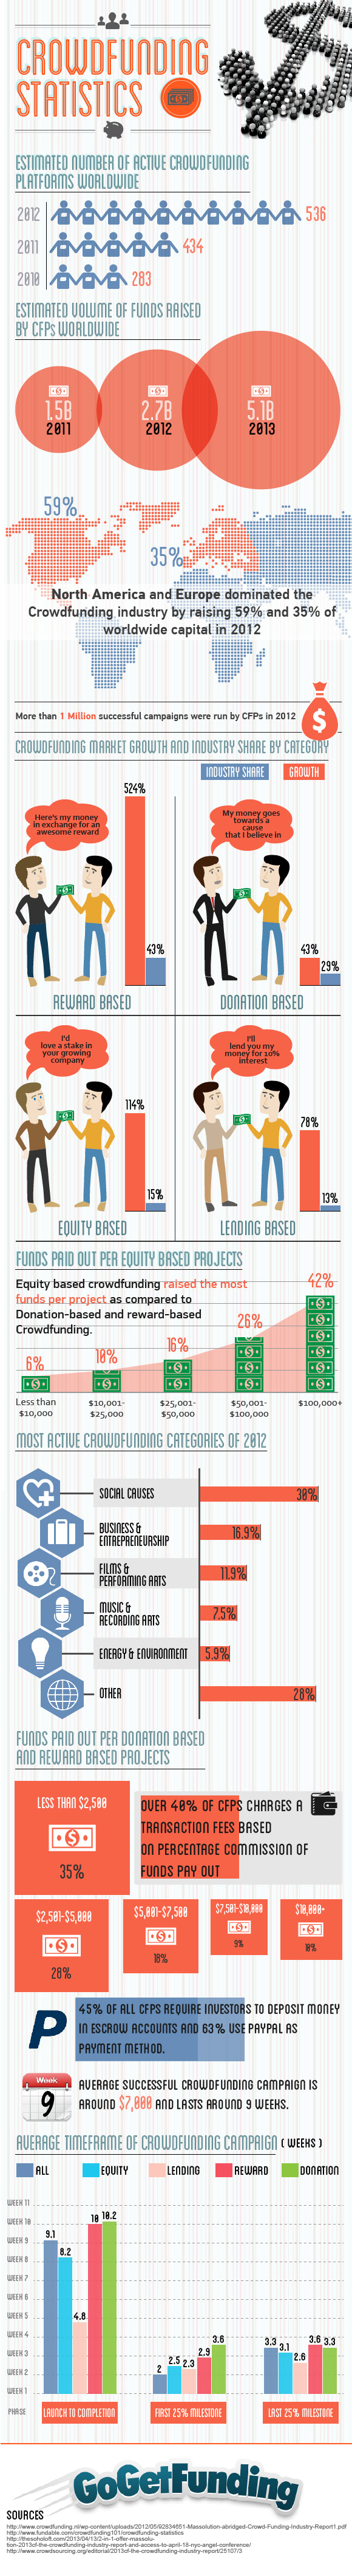 Crowdfunding Statistics 